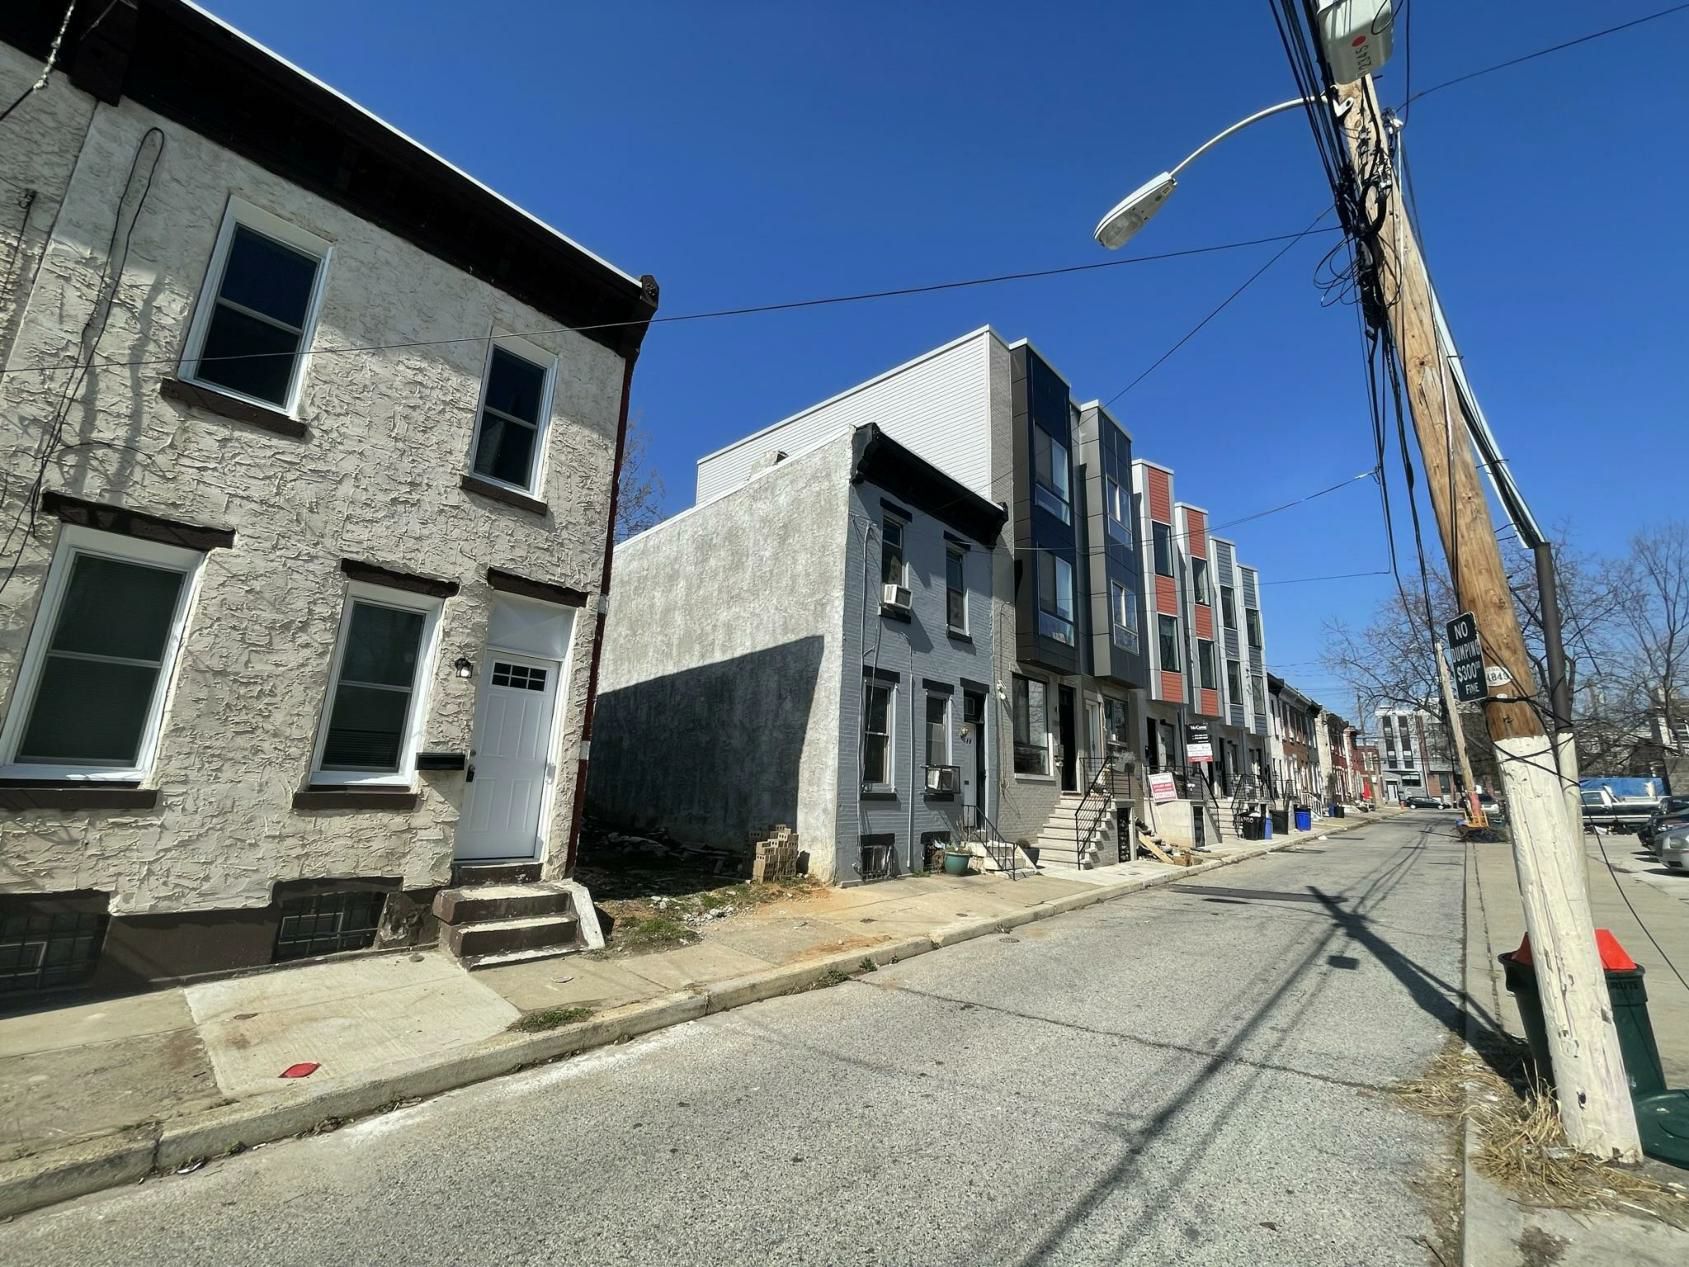 1420 North Etting Street. Site conditions prior to redevelopment. Looking northwest. Credit: Moto Designshop via the City of Philadelphia